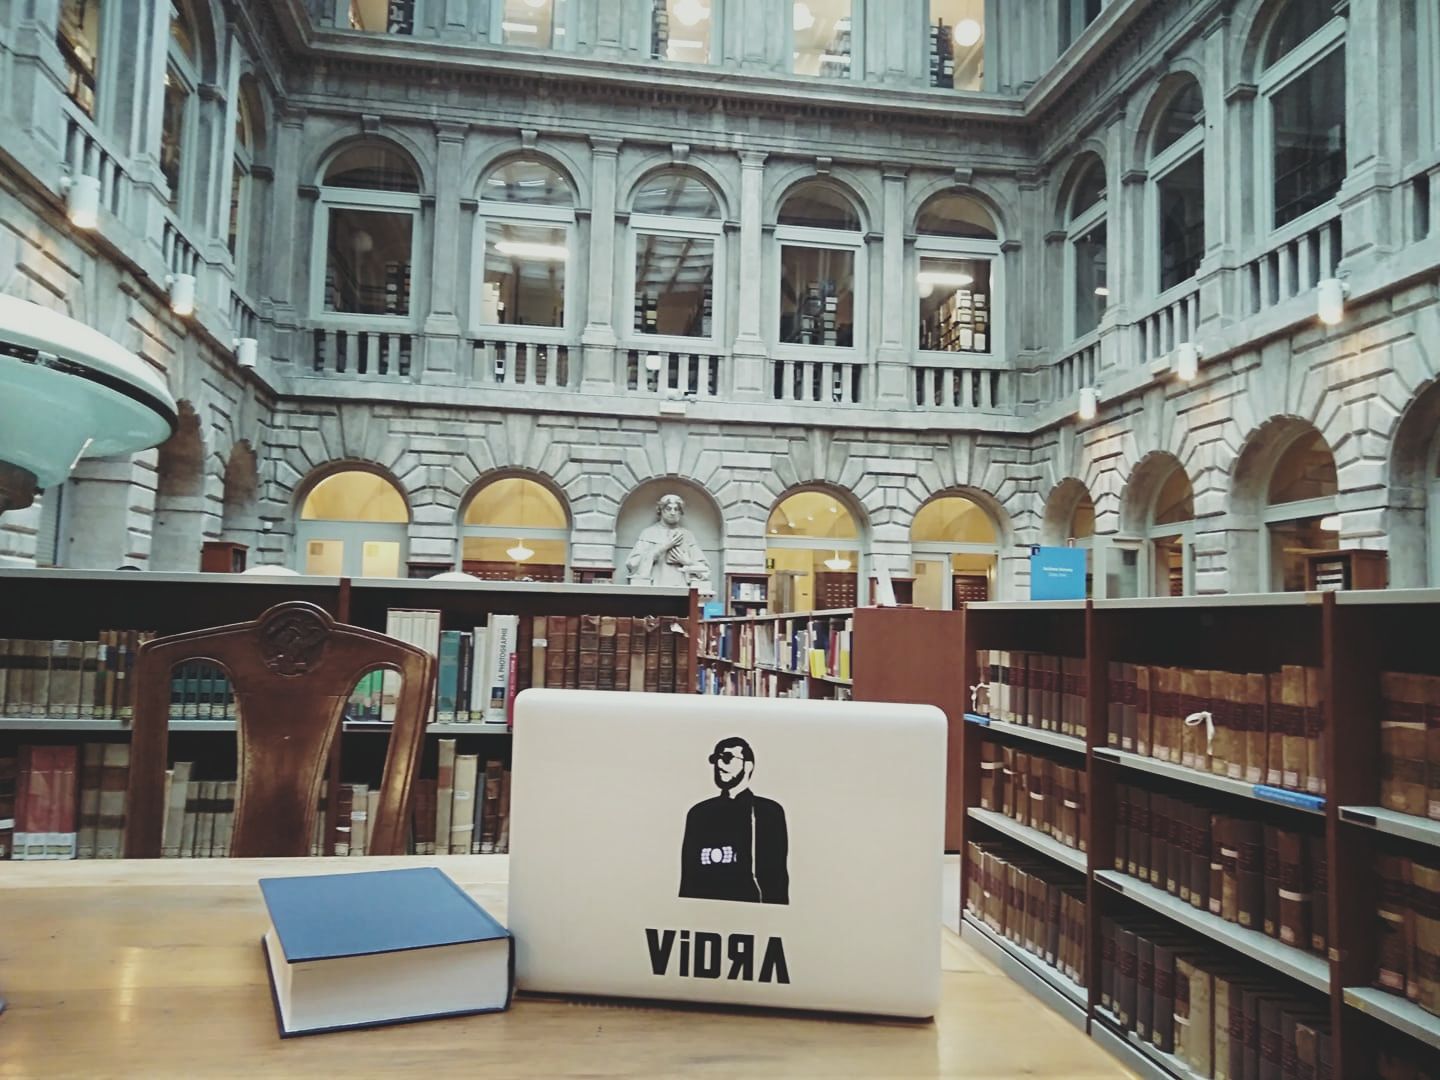 Francesco Fecondo on Twitter: "Venice, Marciana Library! Studying and Rudolf Steiner #vidra #nazionalemarciana #marcianalibrary #malipiero #rudolfsteiner #thephilosophyoffreedom https://t.co/ifx3n1SjGr" /